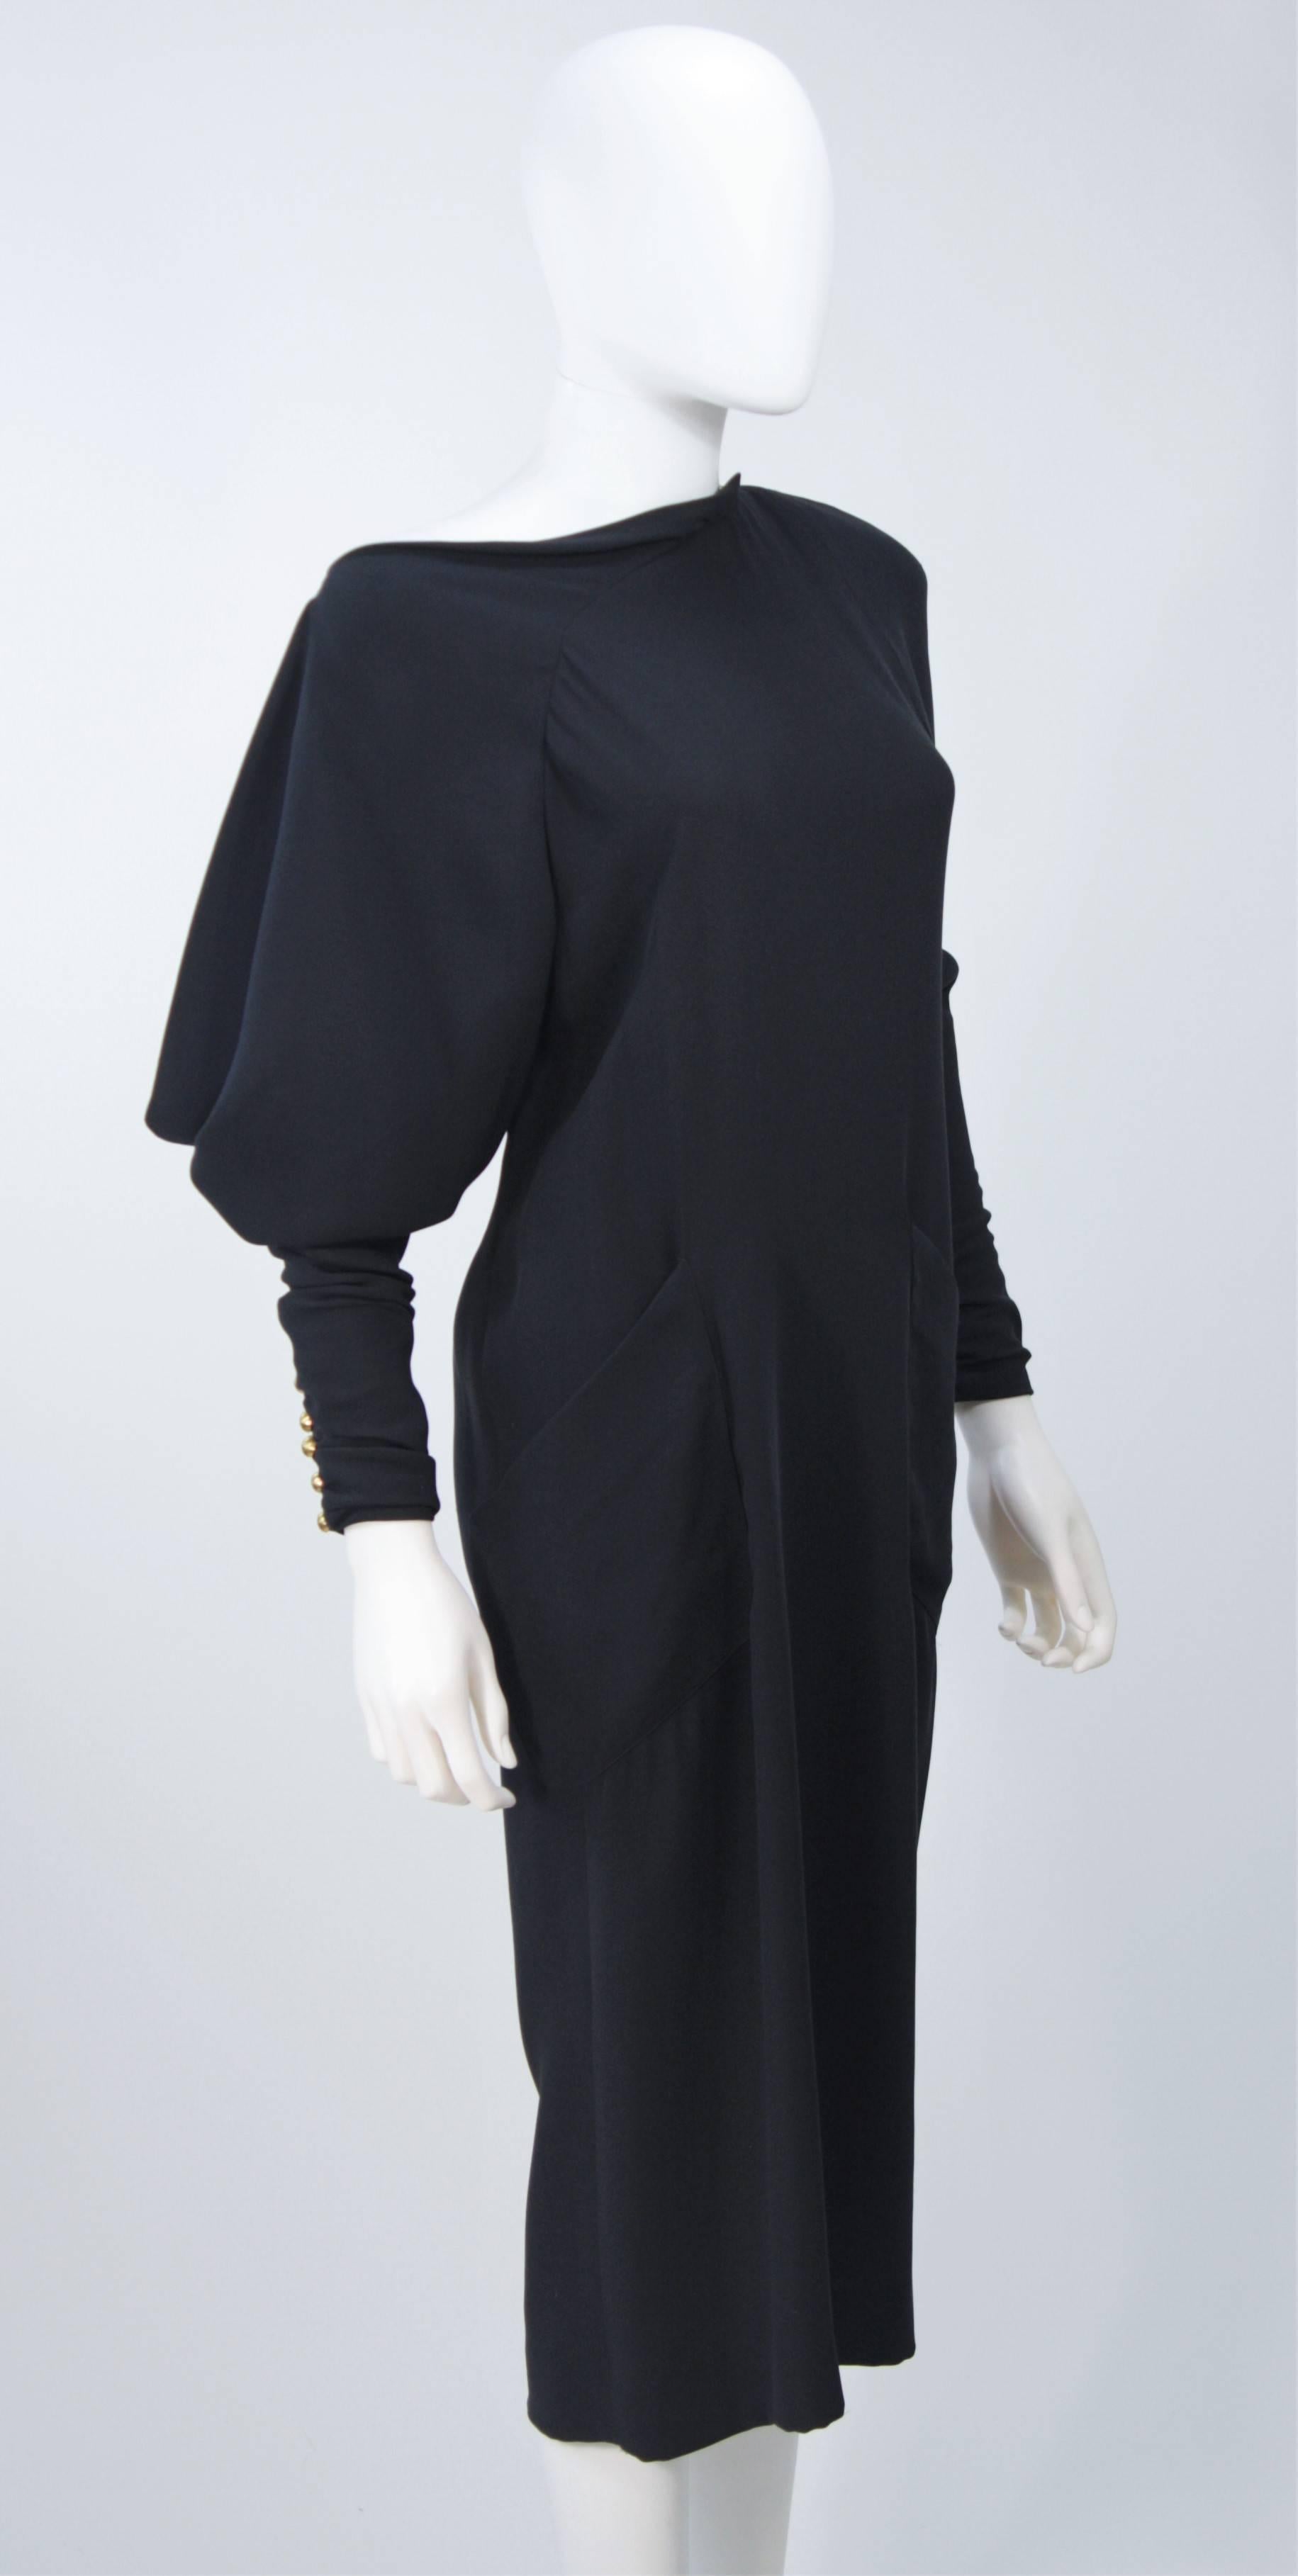 Black KARL LAGERFELD Circa 1980s Navy Asymmetrical Off The Shoulder Silk Dress Size 38